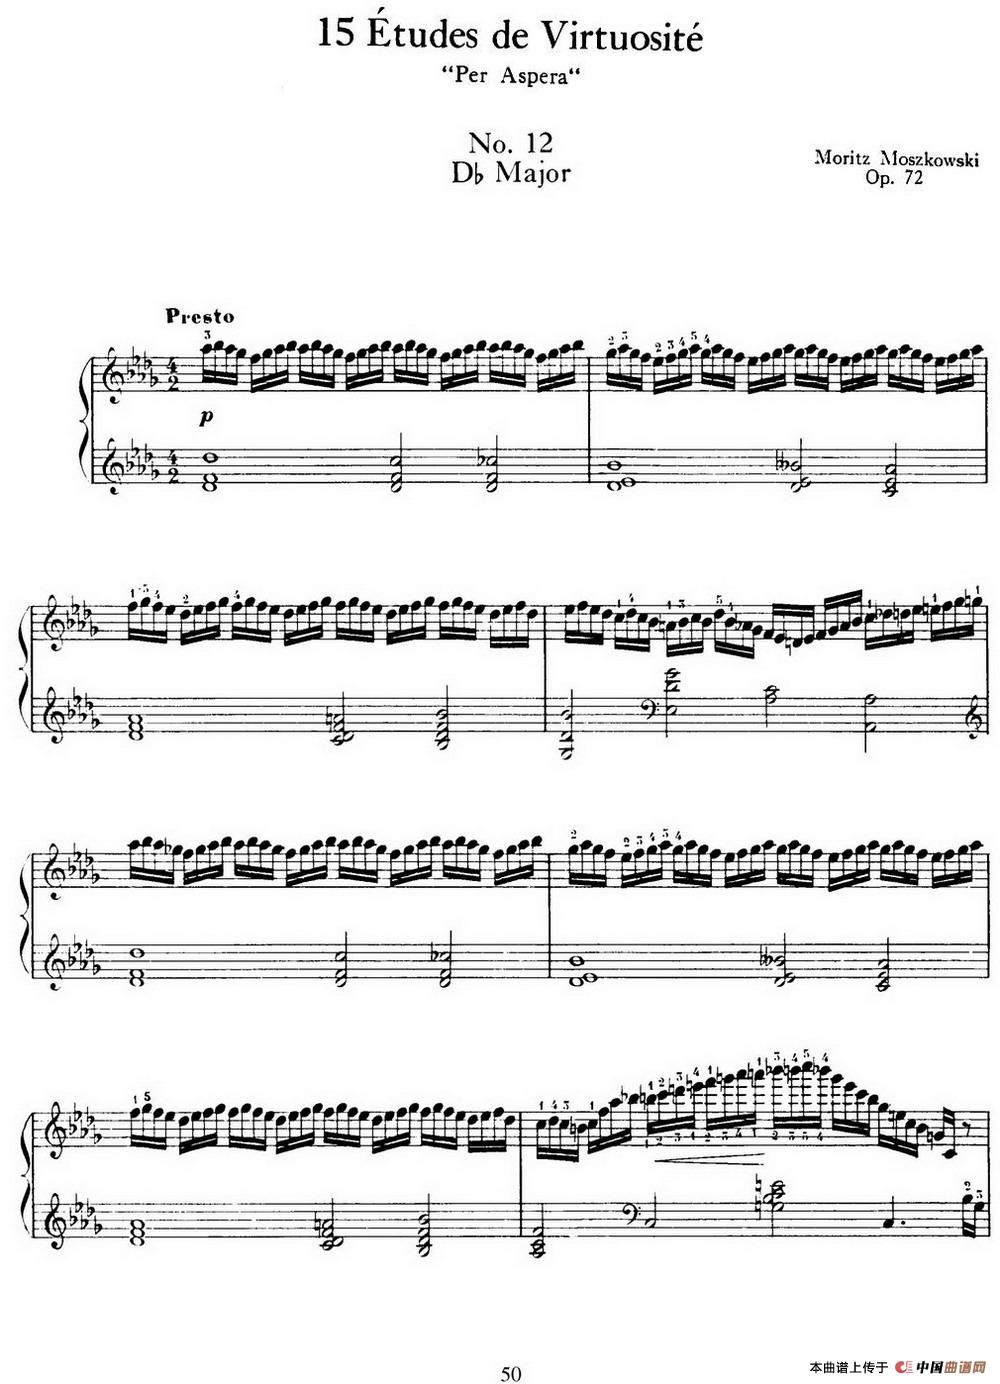 15 Etudes de Virtuosité Op.72 No.12（十五首钢琴练习曲之十二）(1)_050=.jpg